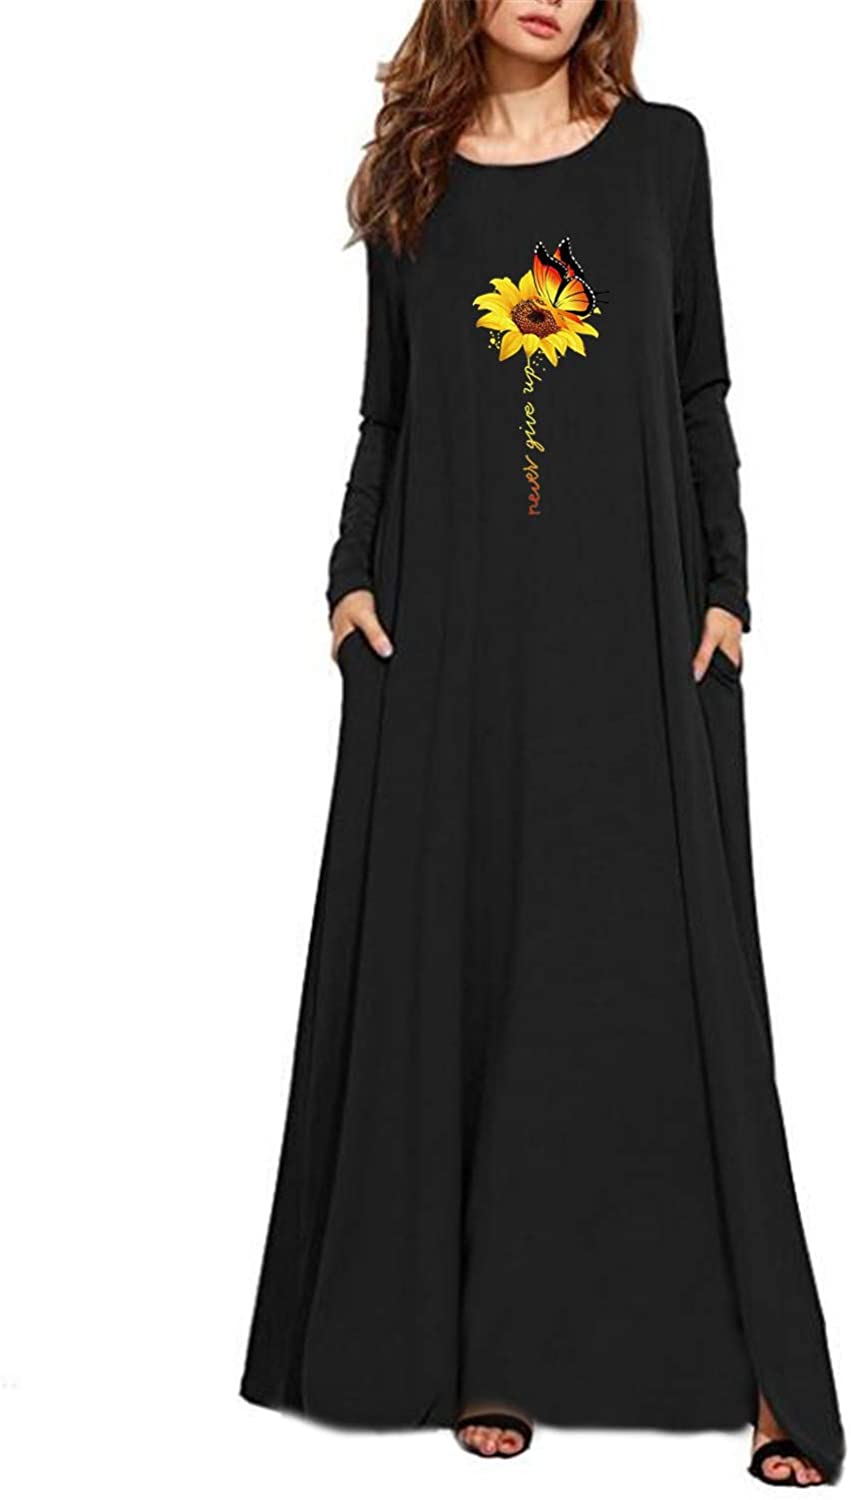 KIDSFORM Women Maxi Dress Long Sleeve Floral Baggy Ball Gown Solid Pocket Party Long Dresses Kaftan 